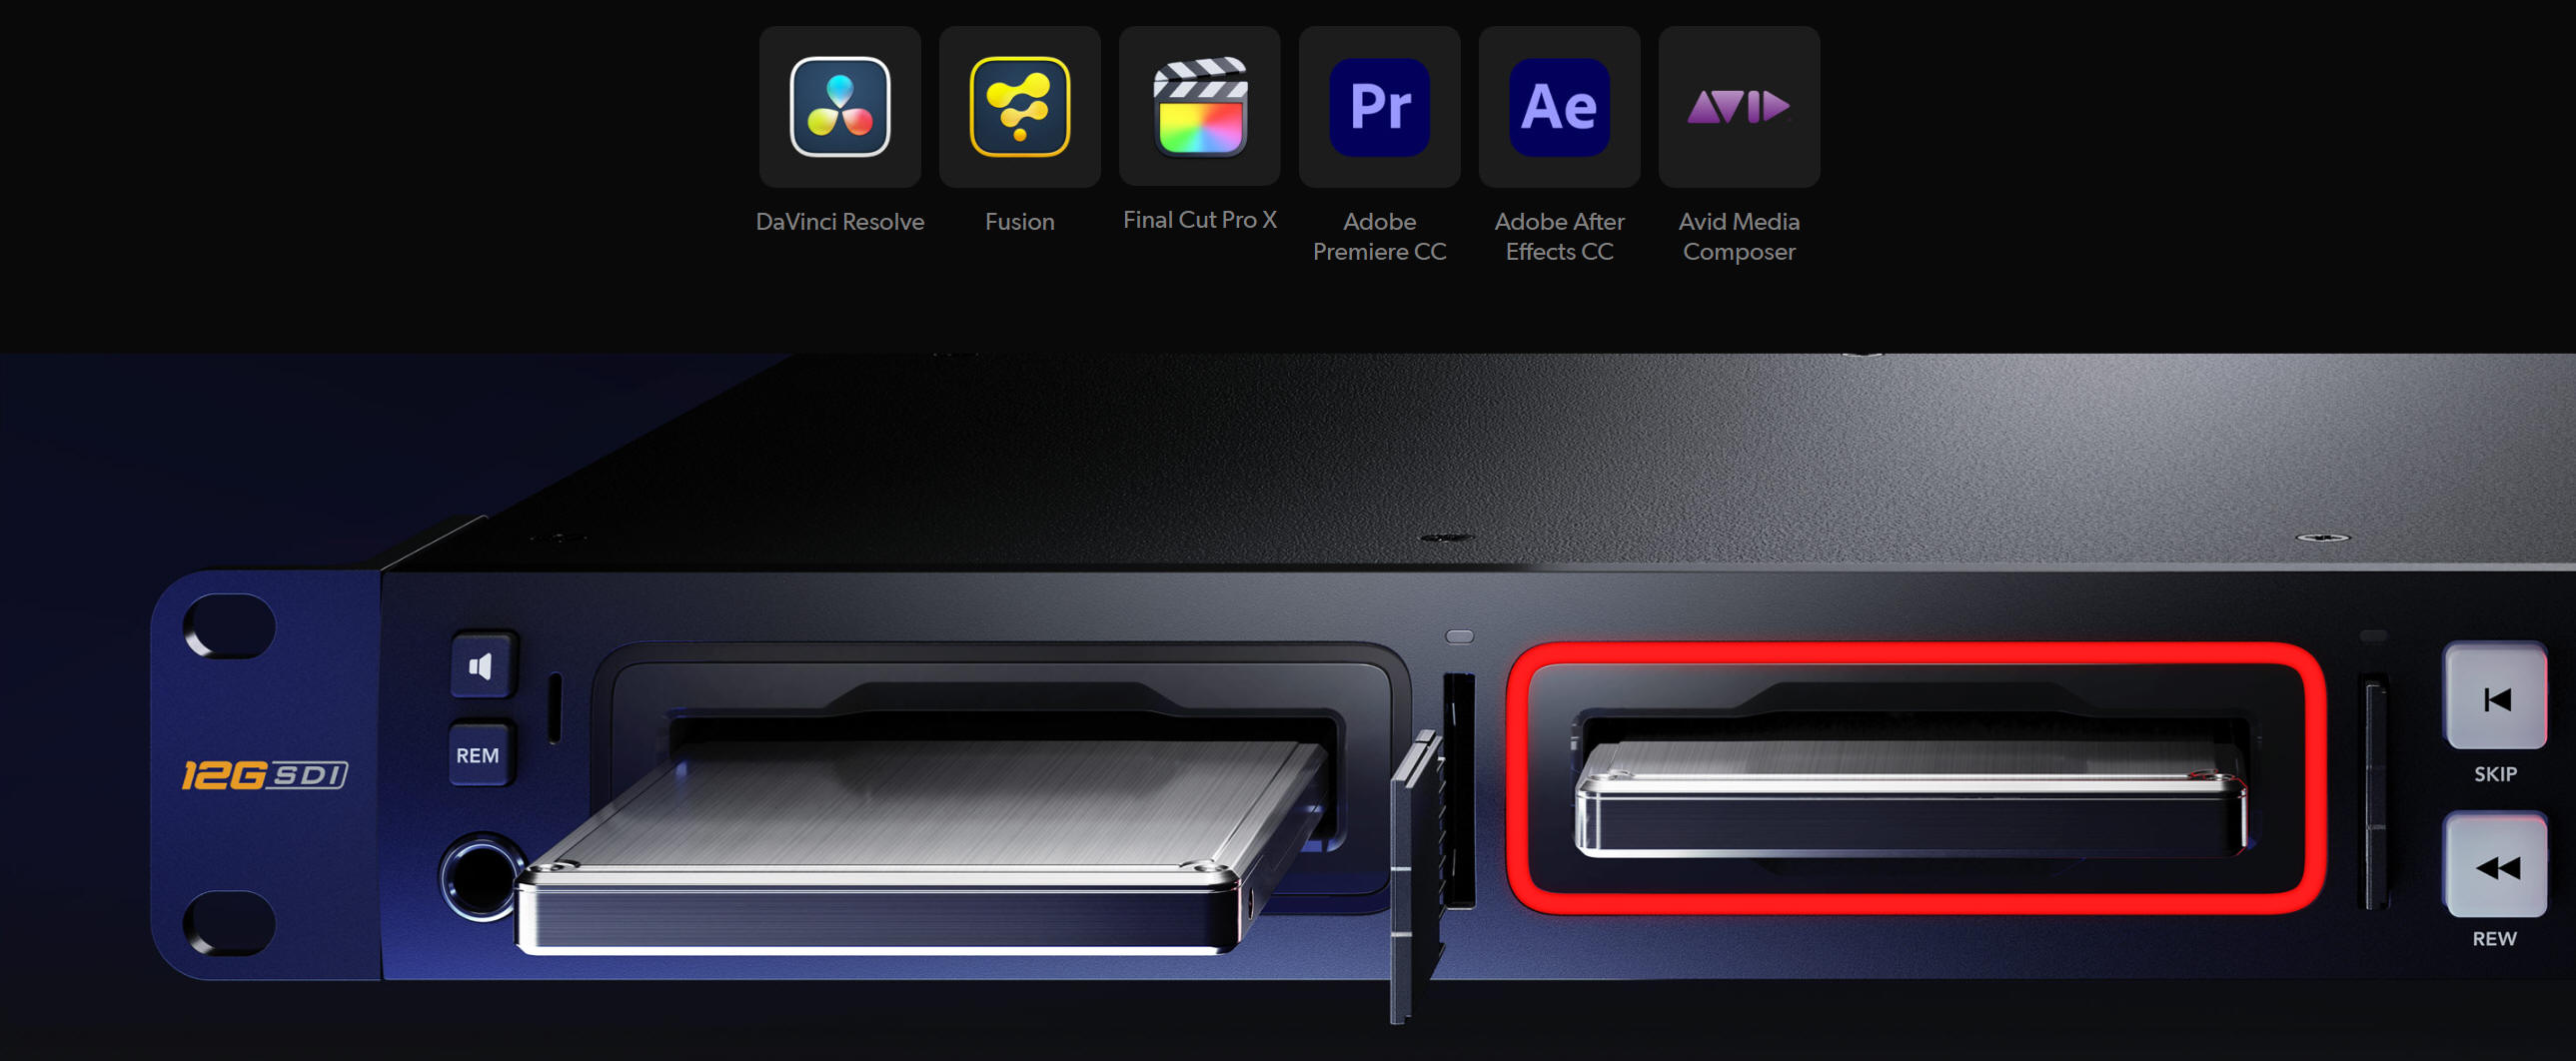  DaVinci Resolve Fusion Final Cut Pro X Adobe Premiere CC Adobe After Effects CC Avid Media Composer